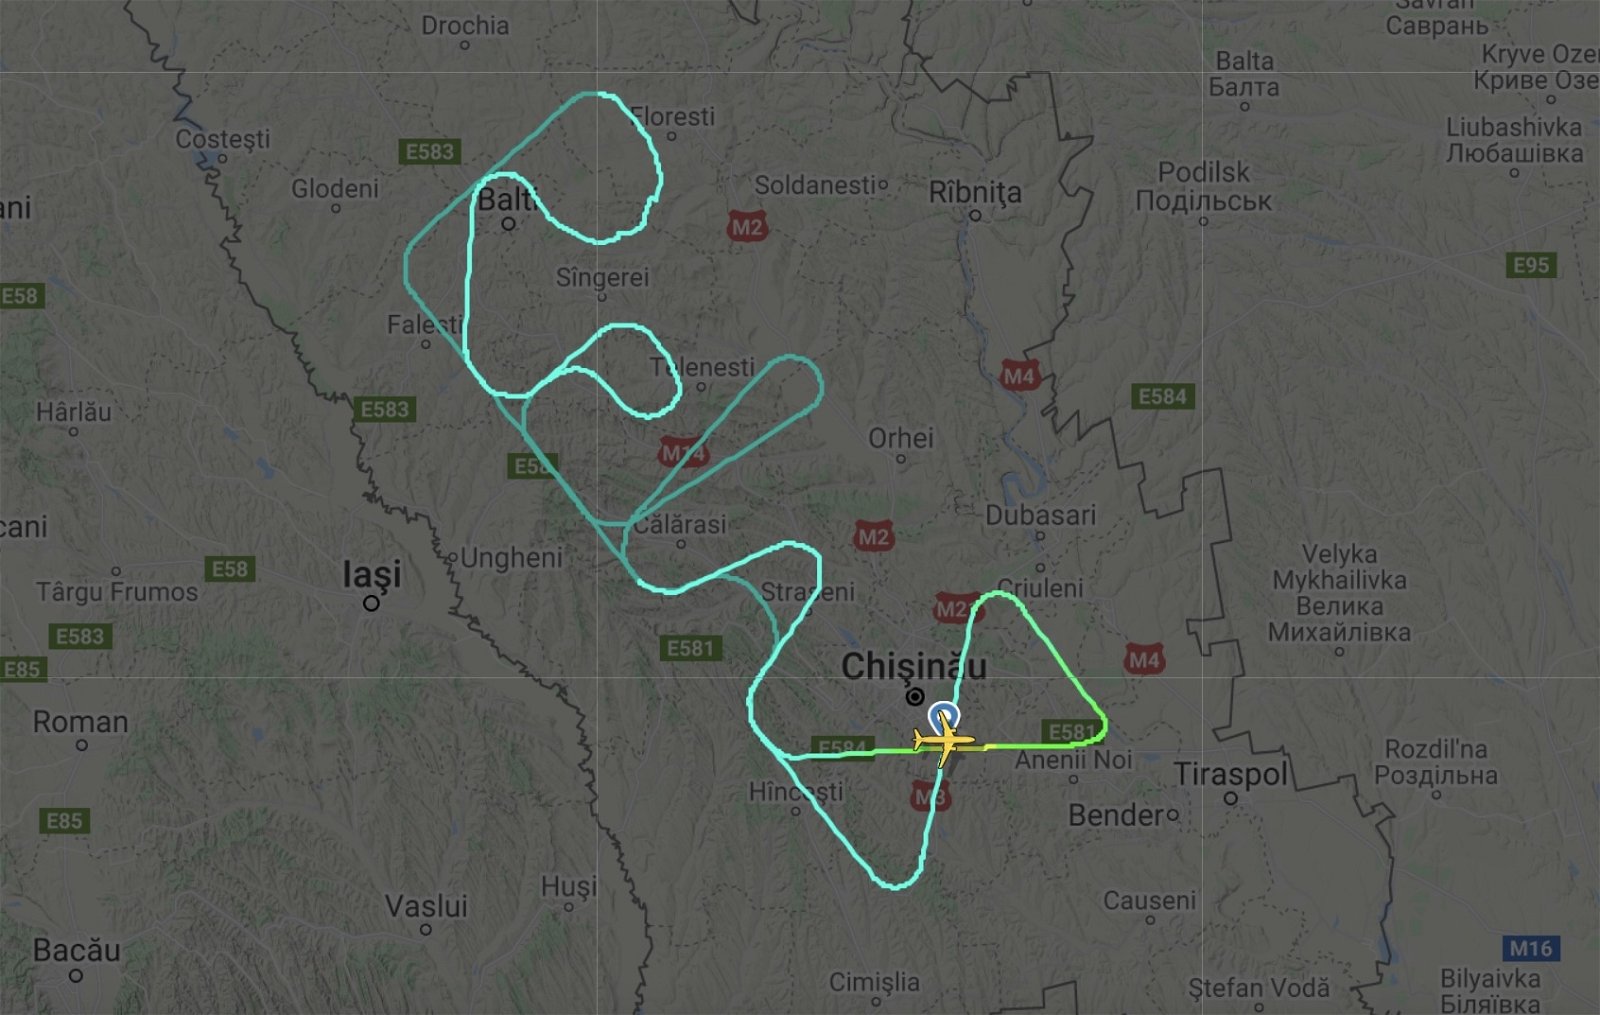 Air Moldova Plane Draws “RELAX” In Sky Near Ukraine Border